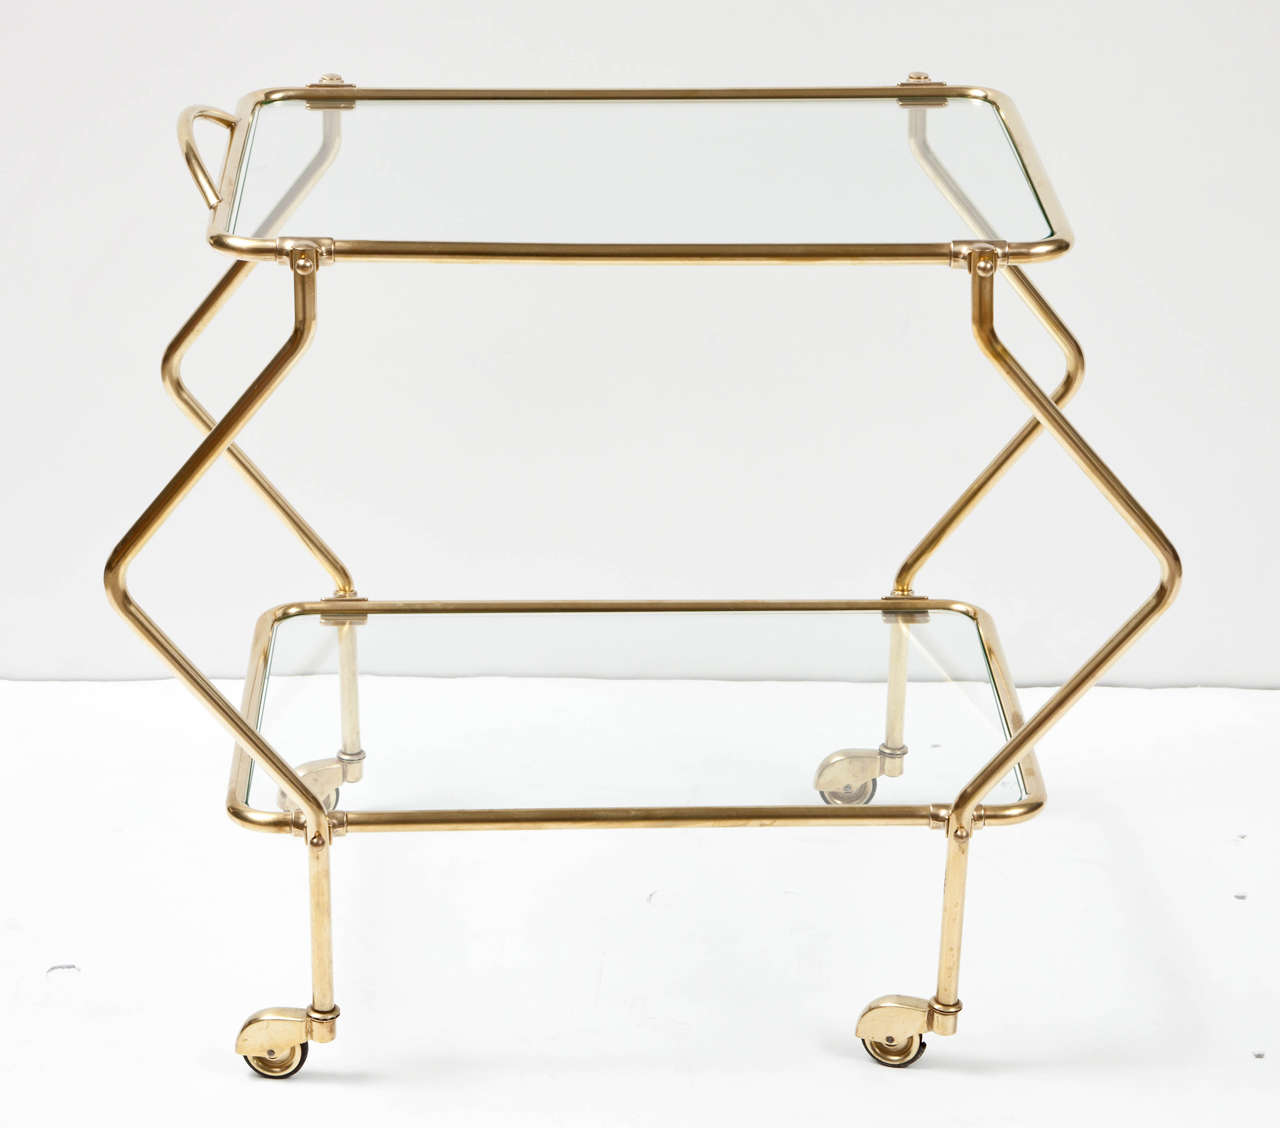 Tubular brass cart with a great geometric line. Italian, 1950s, newly professionally polished. Tray area 23.75